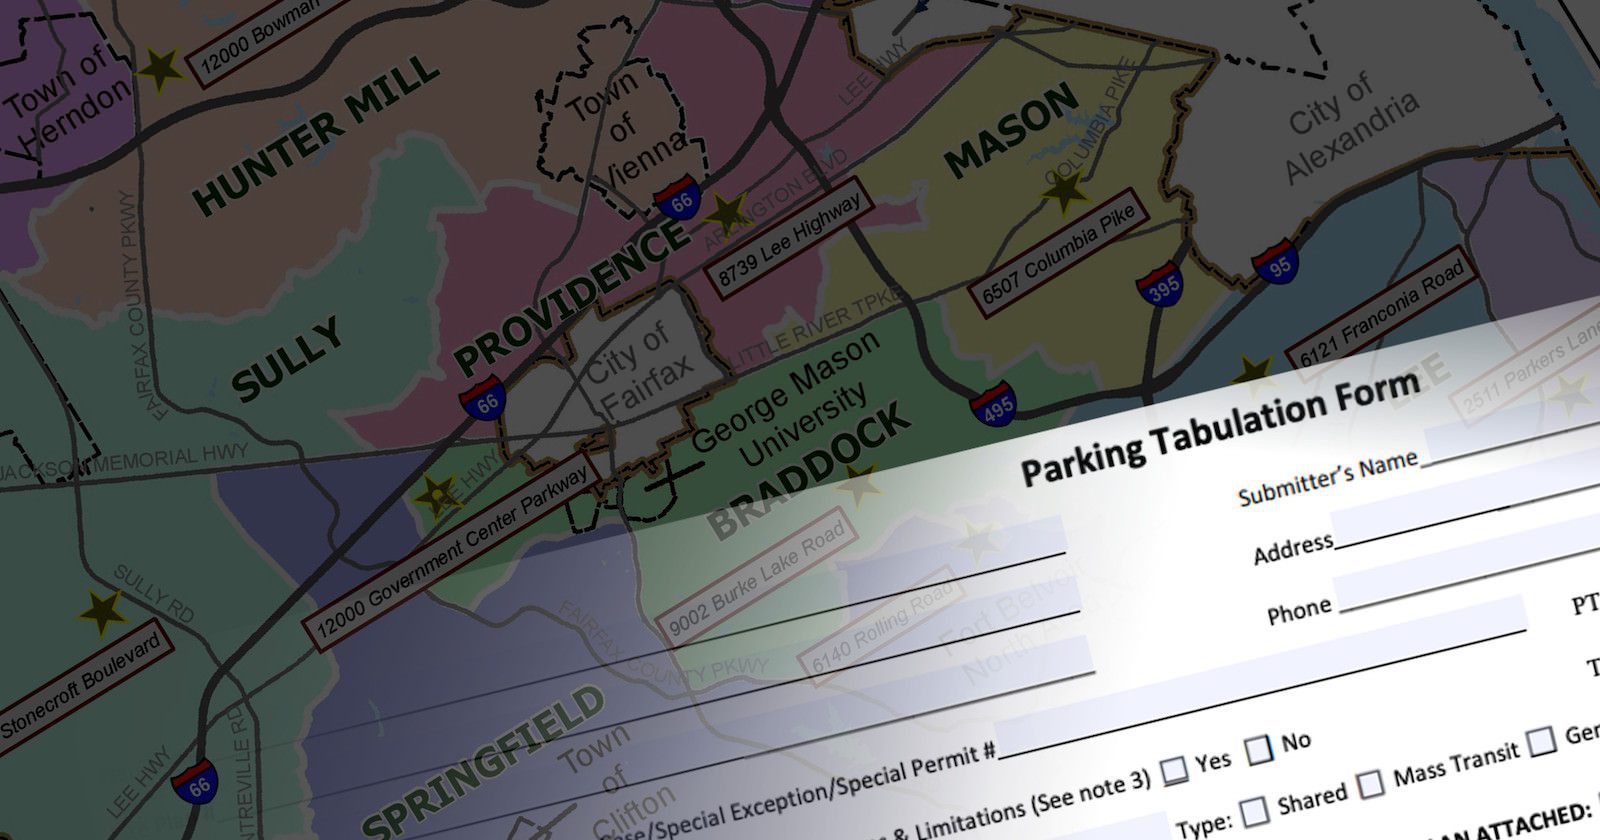 fairfax county parking tabulation form